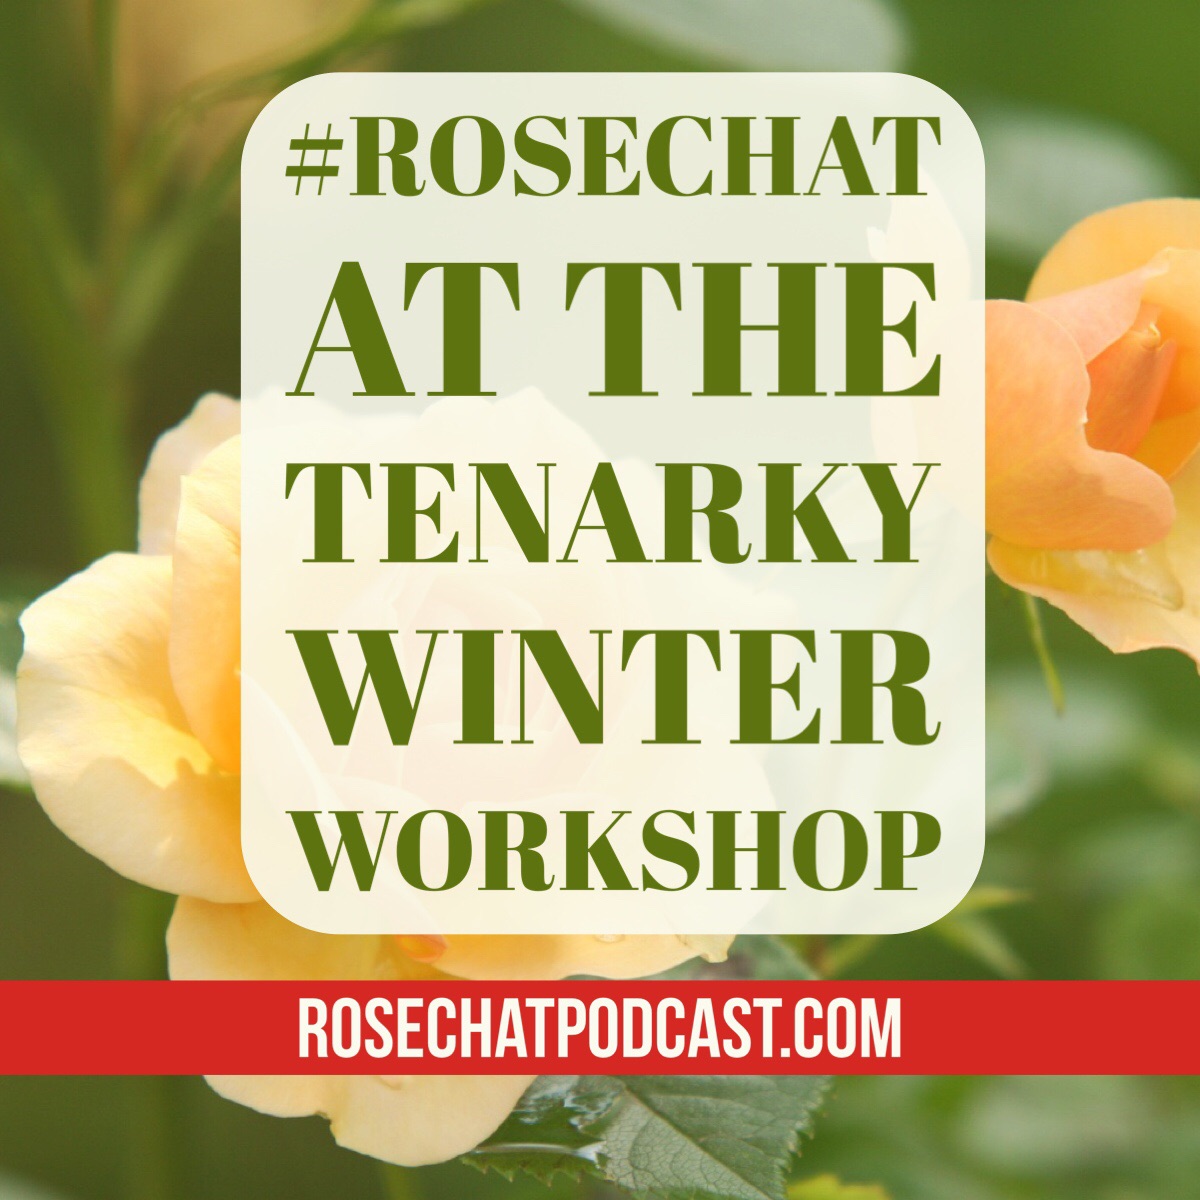 Tenarky 2016 Winter Workshop 